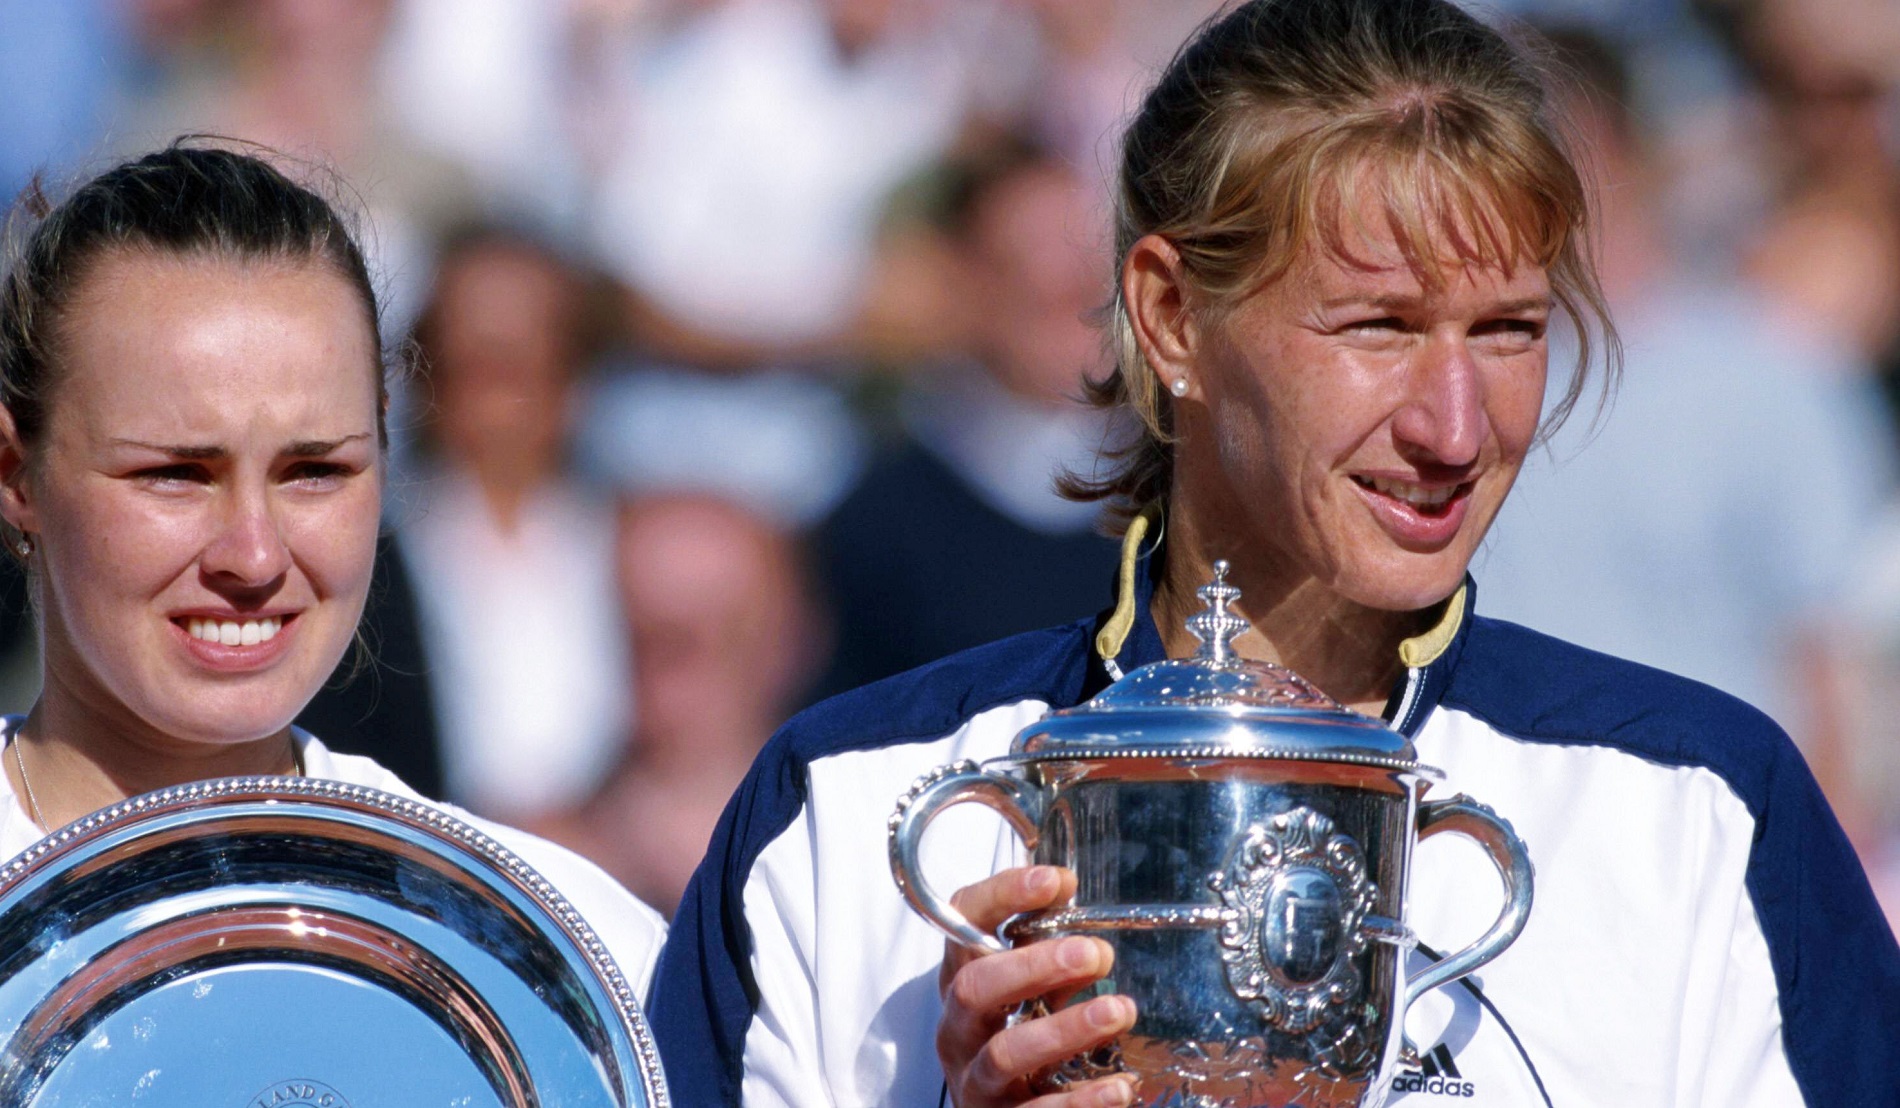 The 15-year-old Martina Hingis beat Tennis Majors